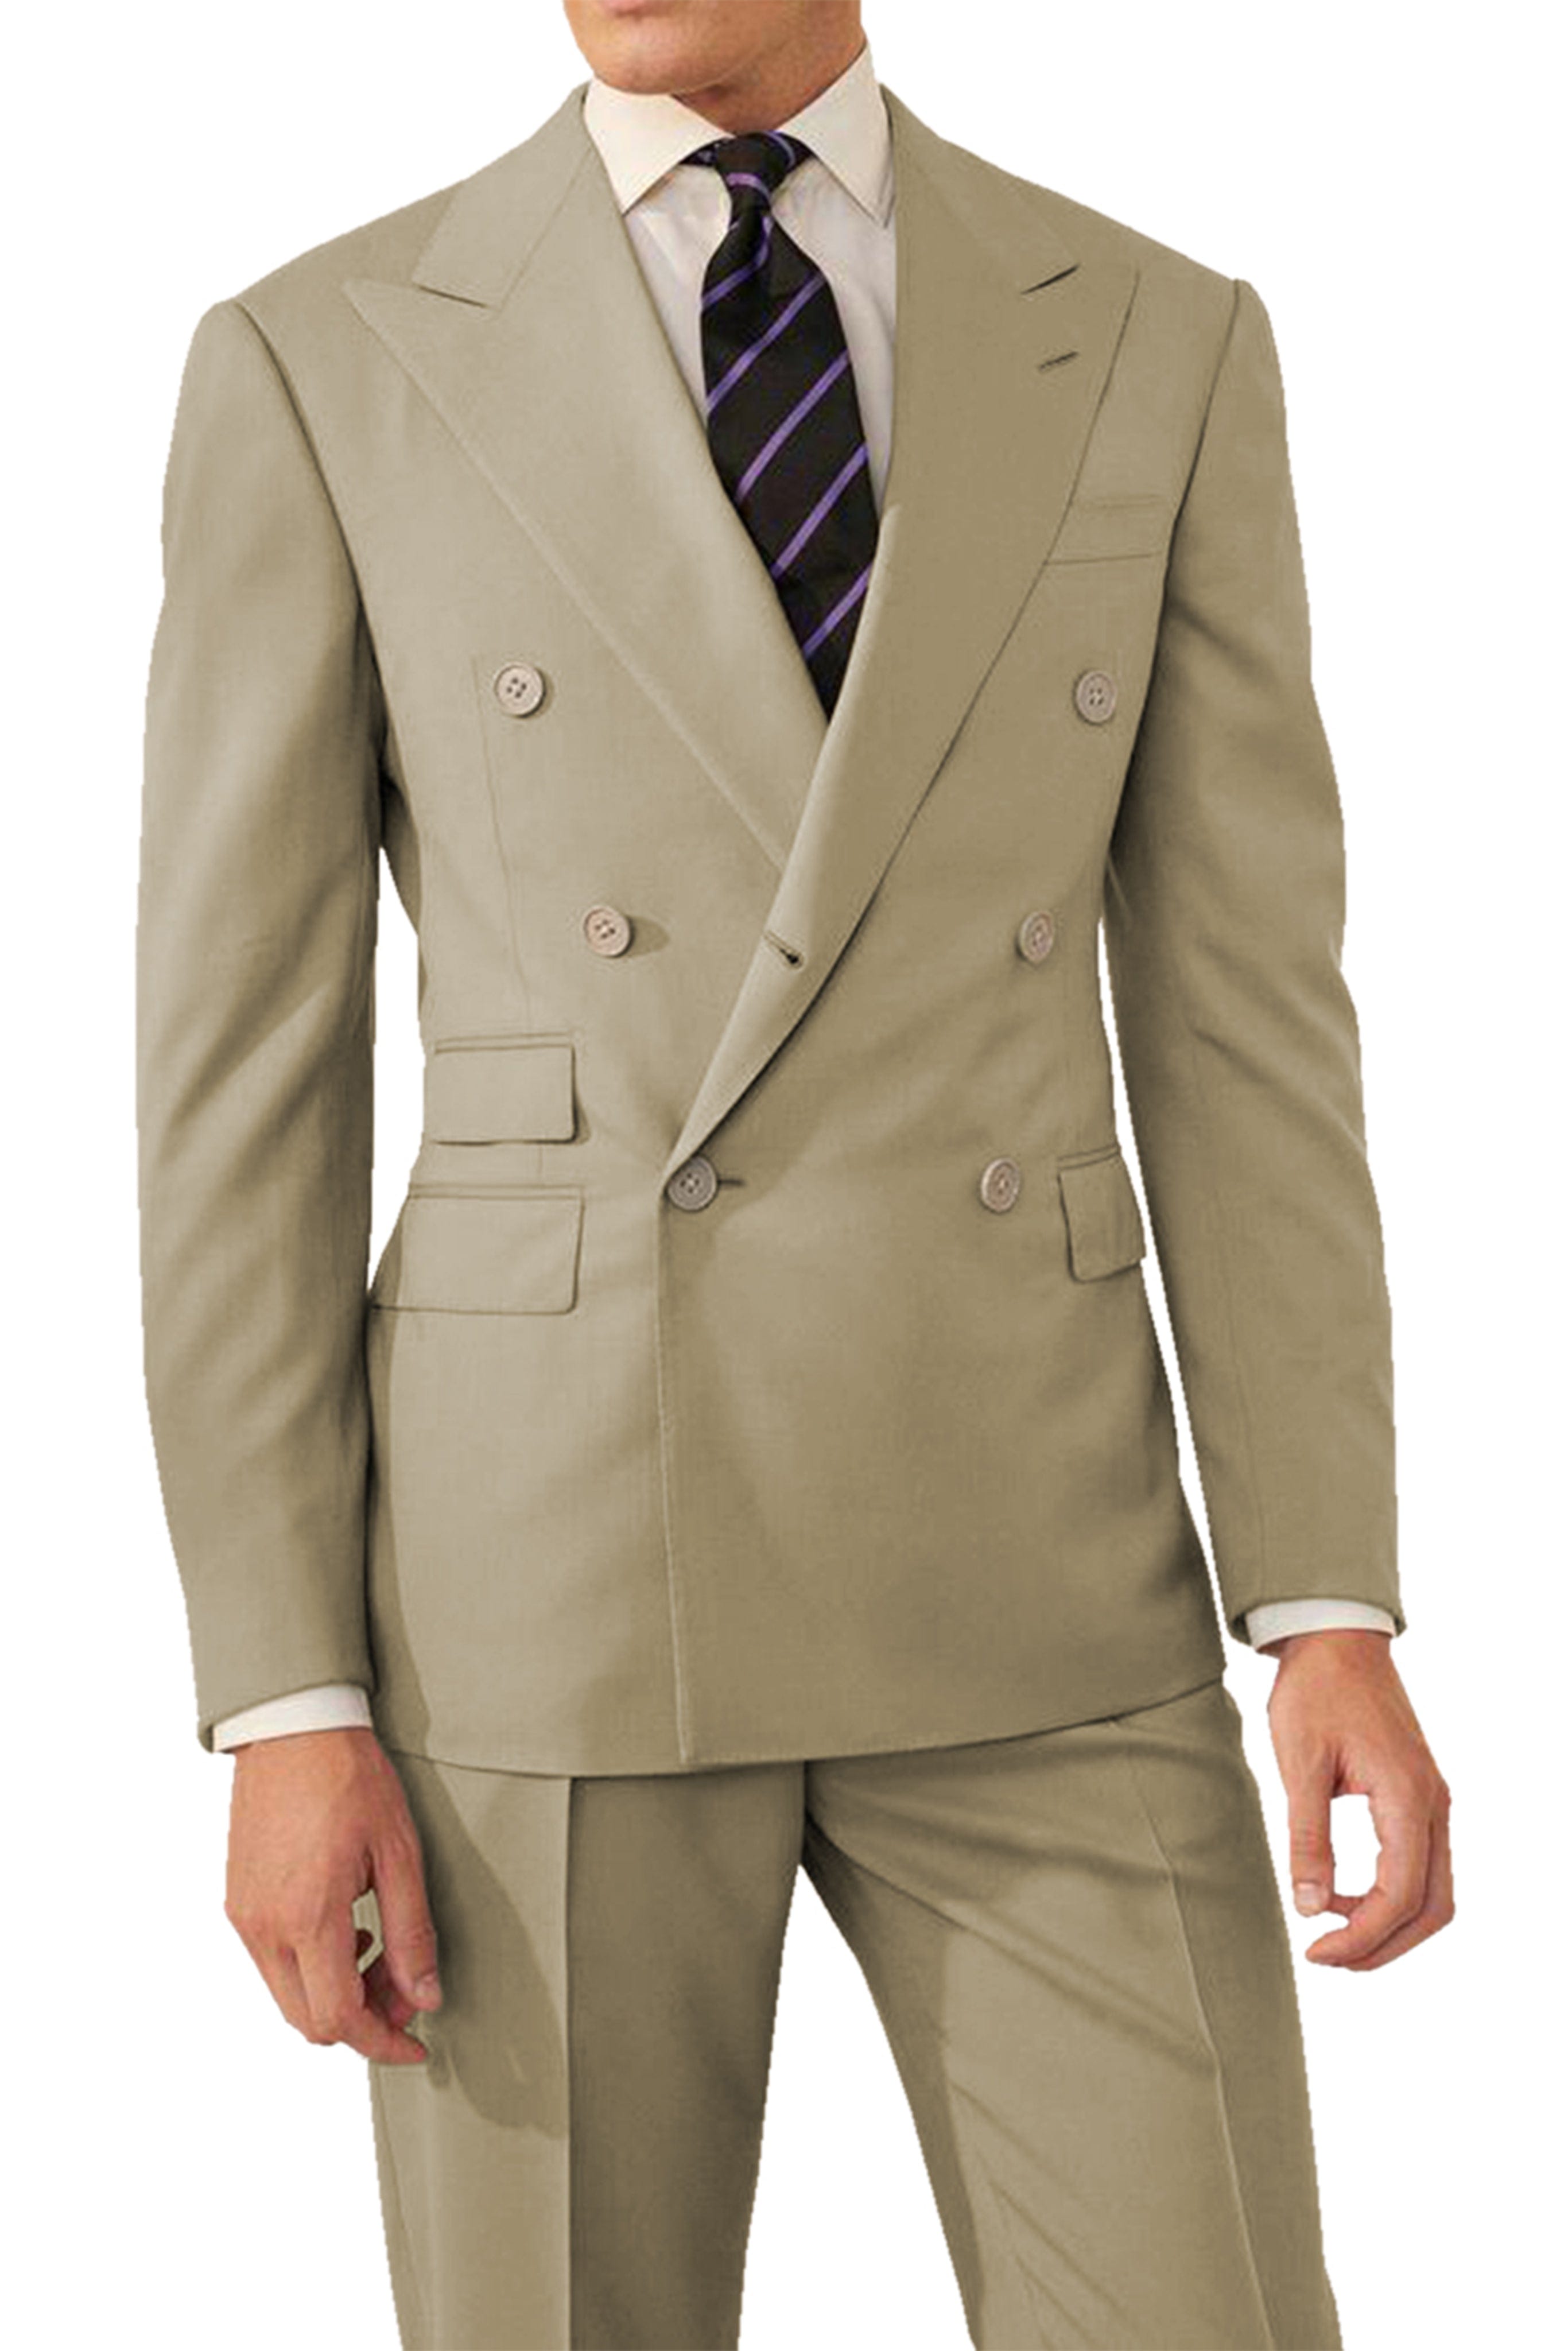 aesido 2 Pieces Double Breasted Men's Suit  (Blazer+Pants)